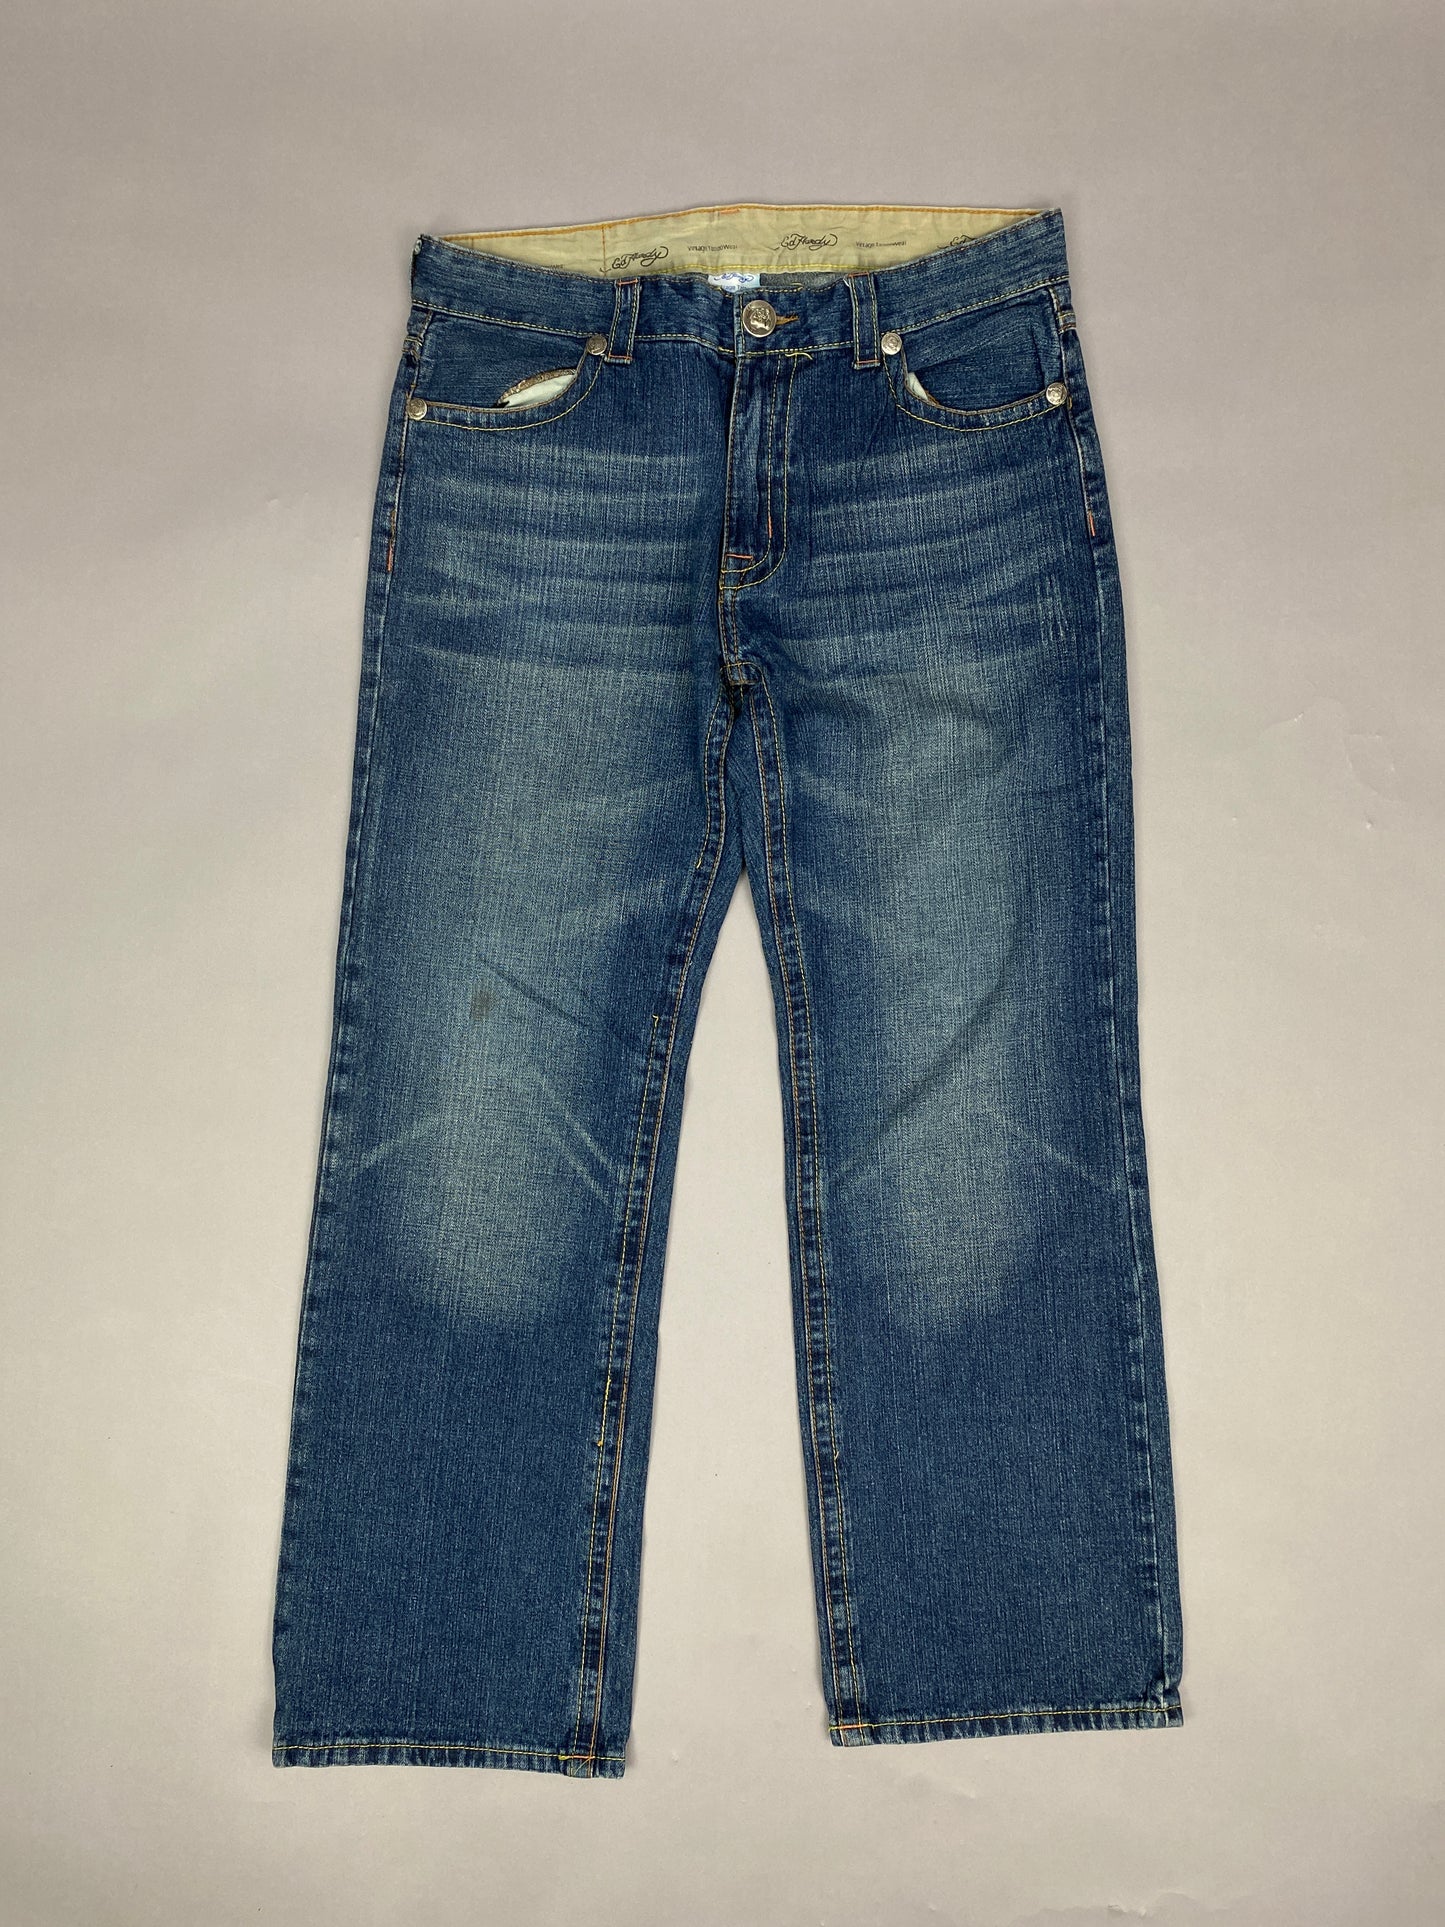 Vintage Ed Hardy Jeans - 36 x 33